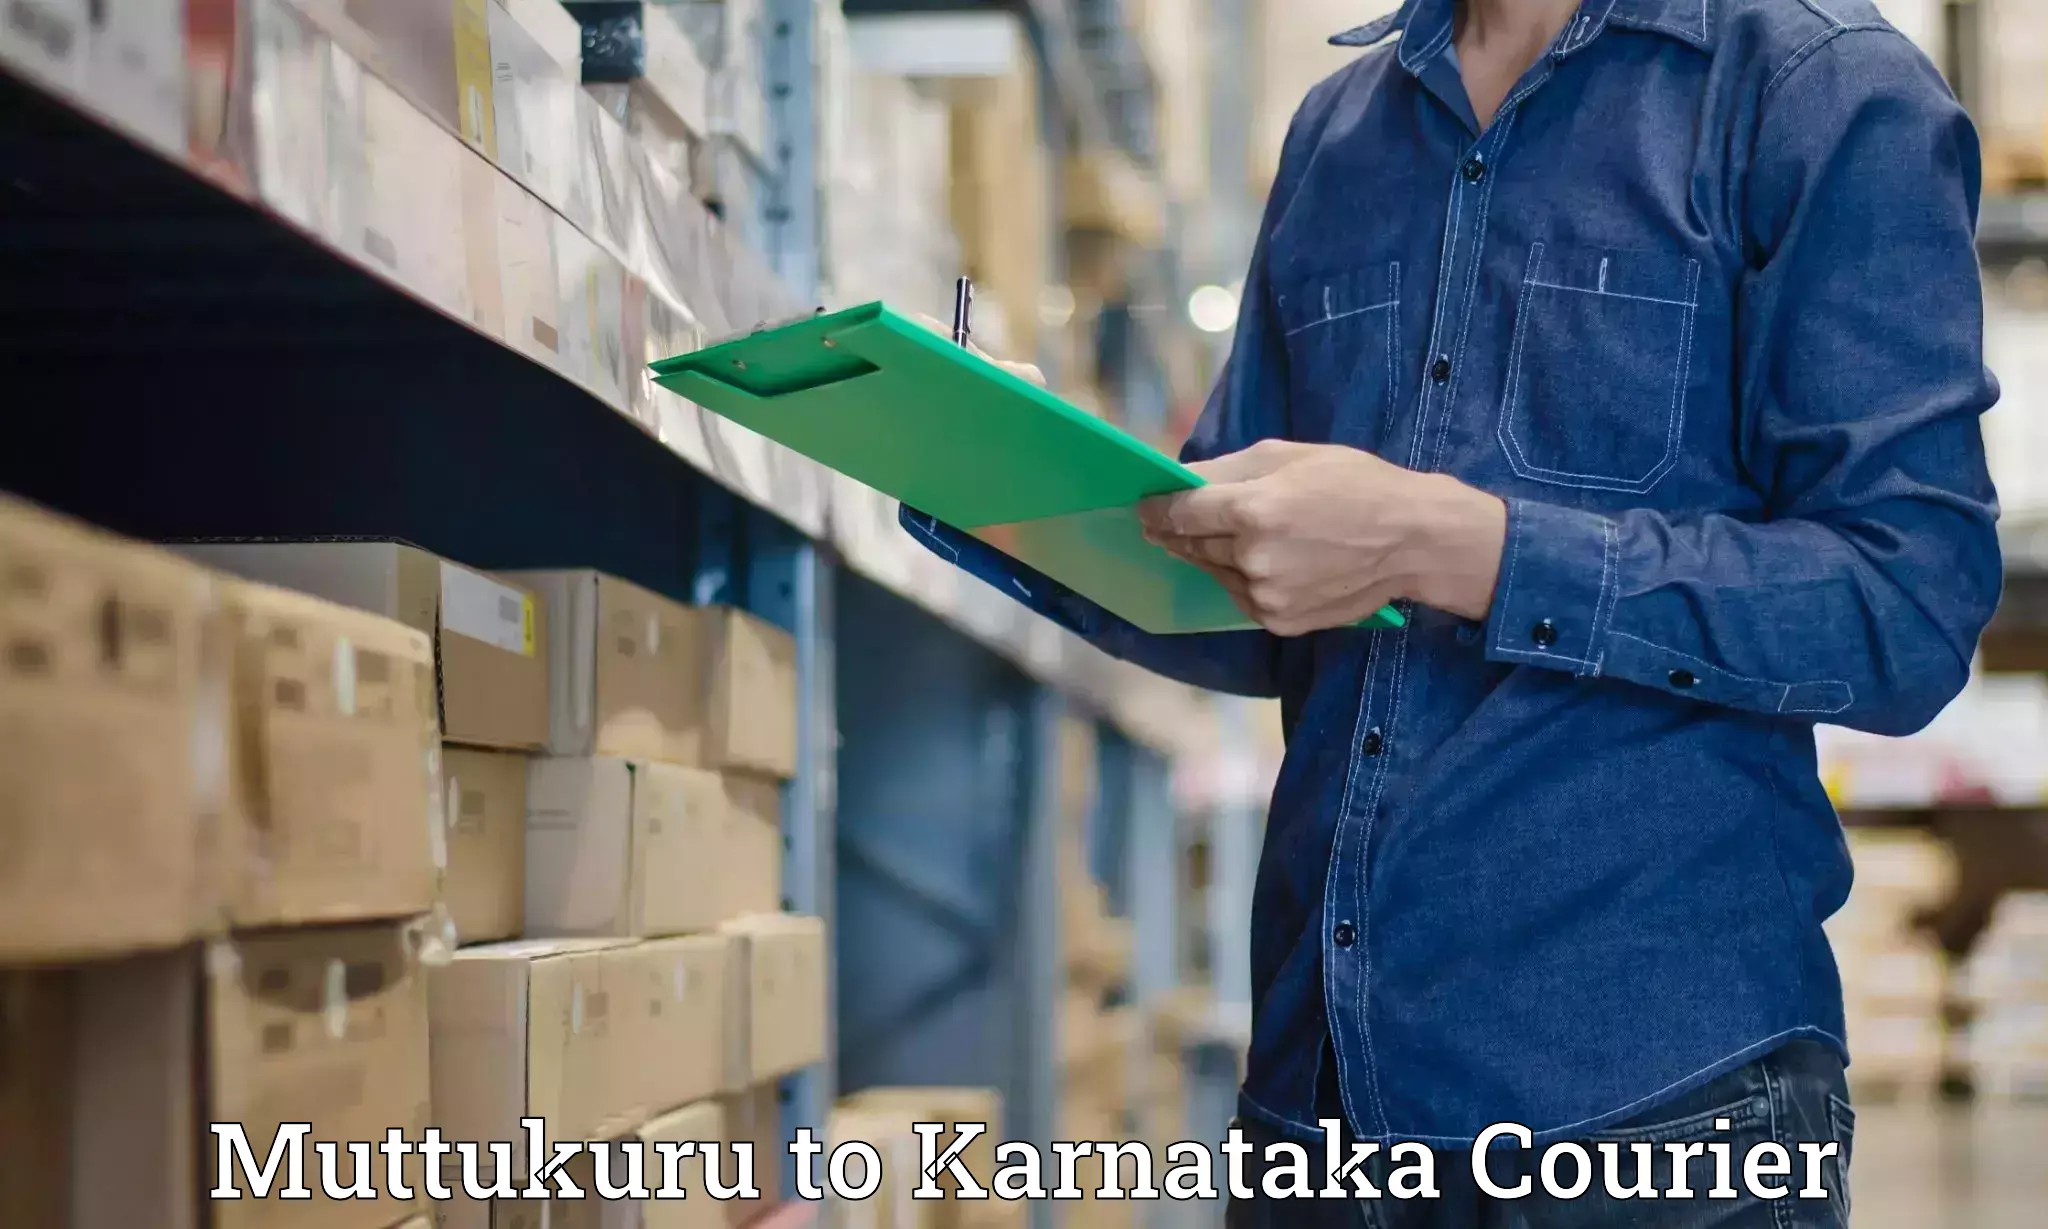 Quick dispatch service Muttukuru to Karnataka